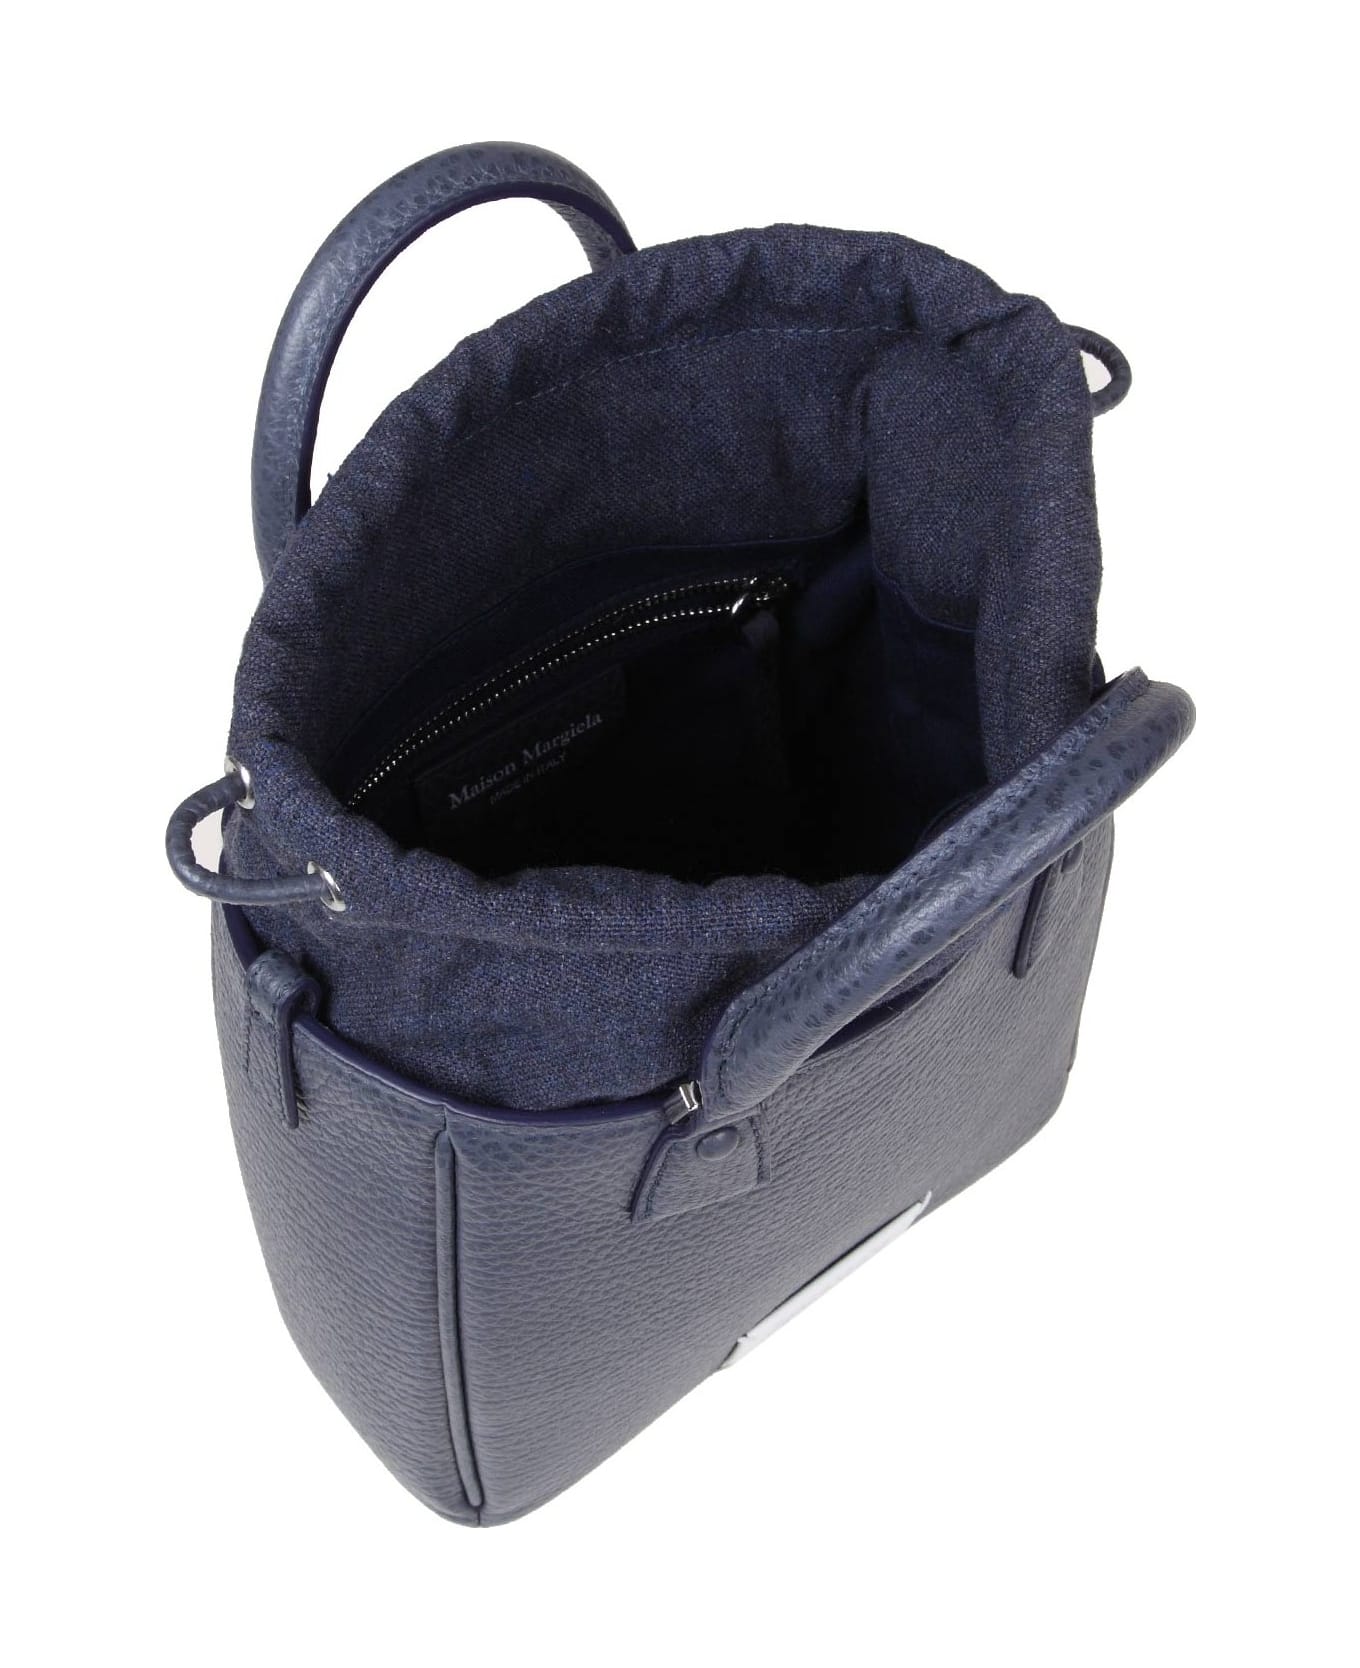 Maison Margiela 5c Vertical Tote Bag In Blue Leather - BLUE